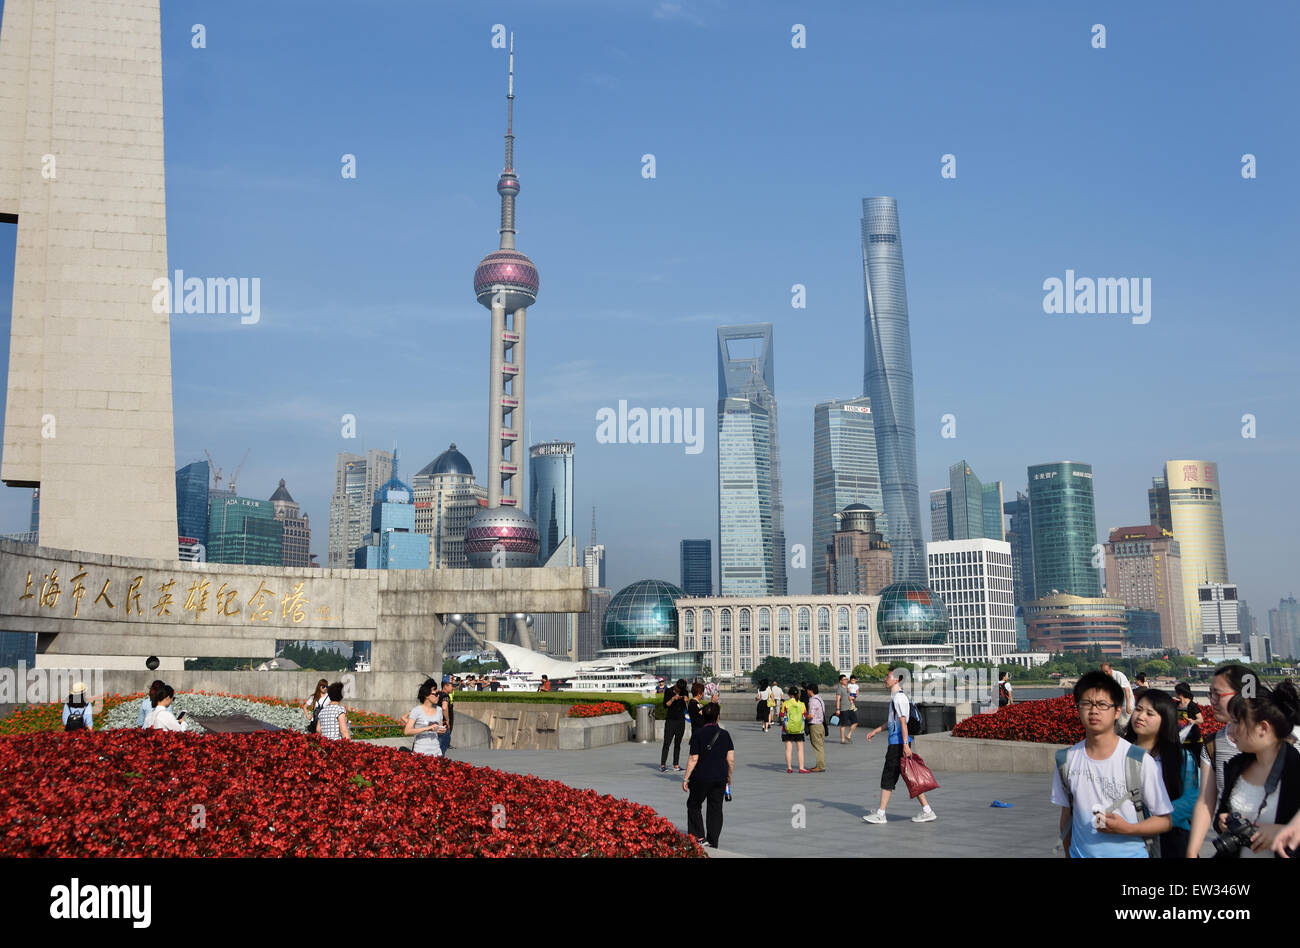 Dal Parco di Huangpu Shanghai Pudong skyline della città Oriental Pearl TV Tower, la Torre Jin Mao, il World Financial Center, il fiume Huangpu Foto Stock